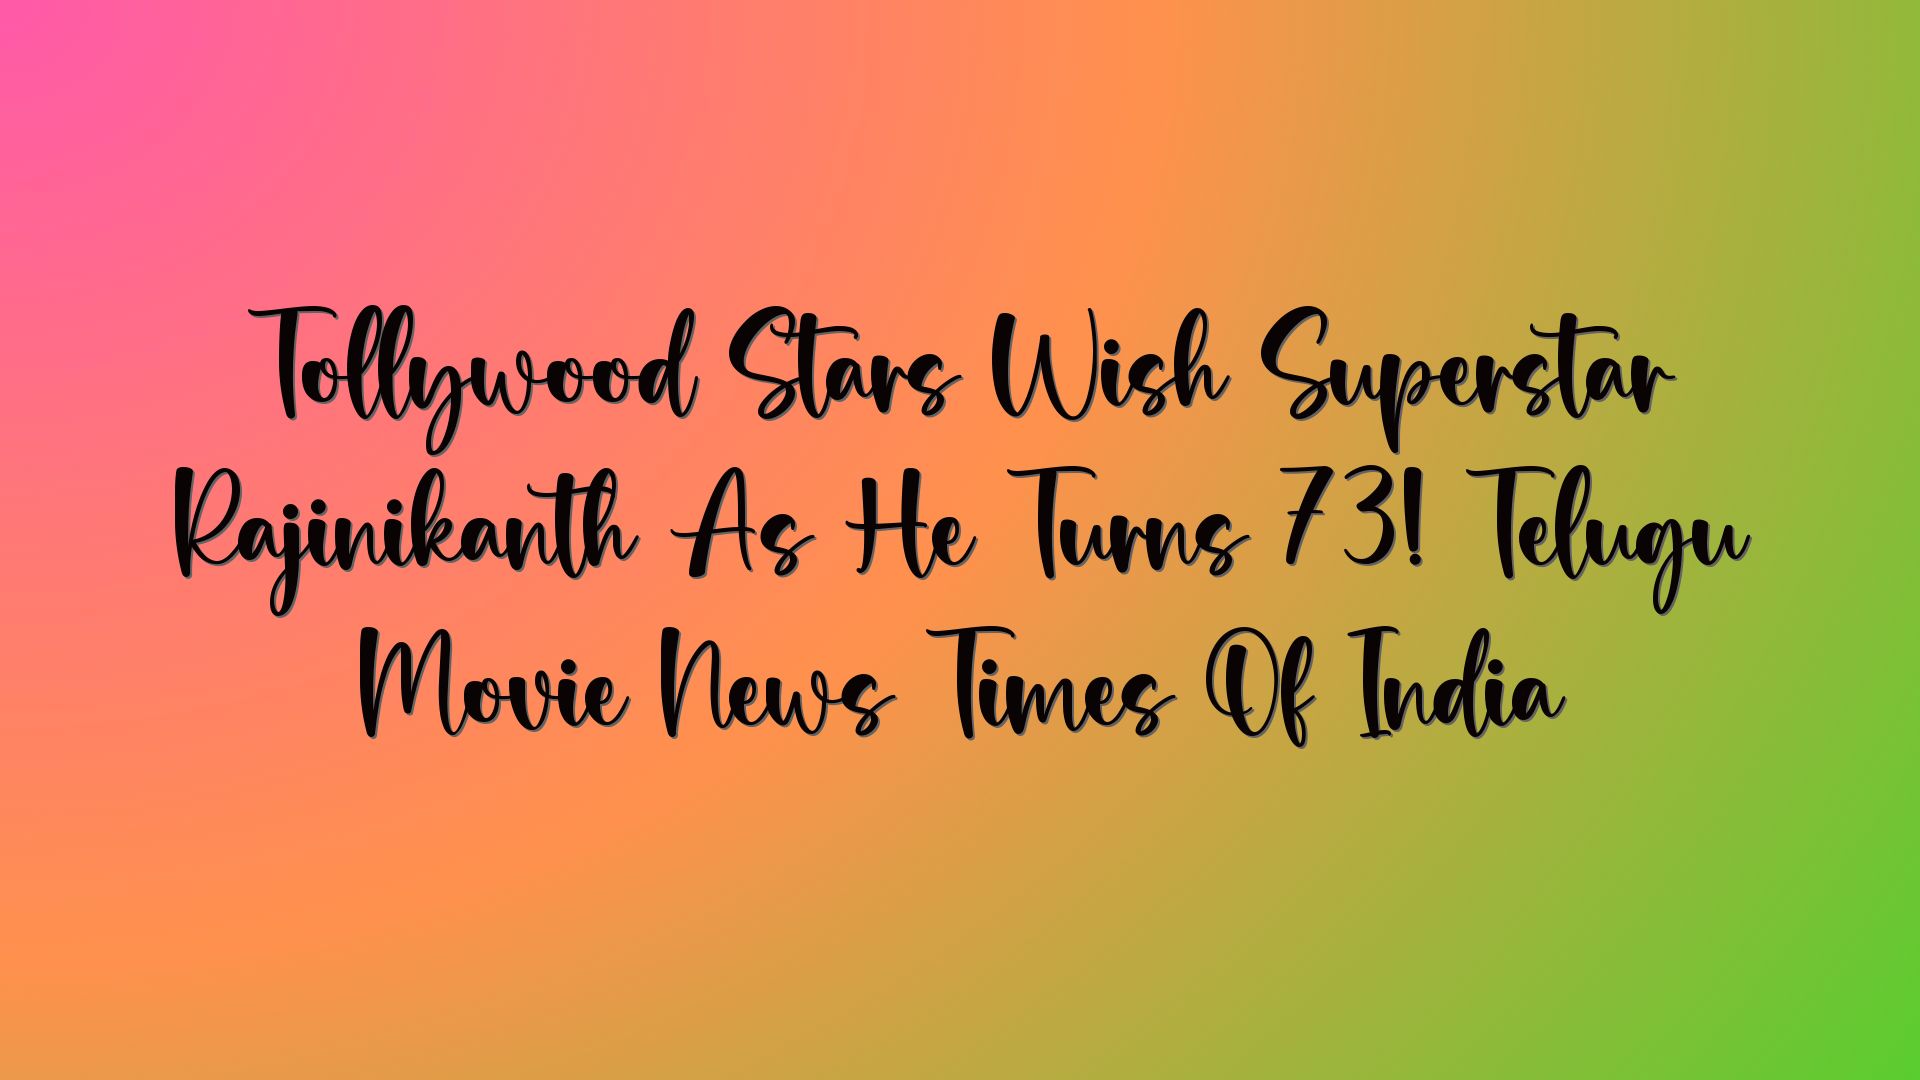 Tollywood Stars Wish Superstar Rajinikanth As He Turns 73! Telugu Movie News Times Of India